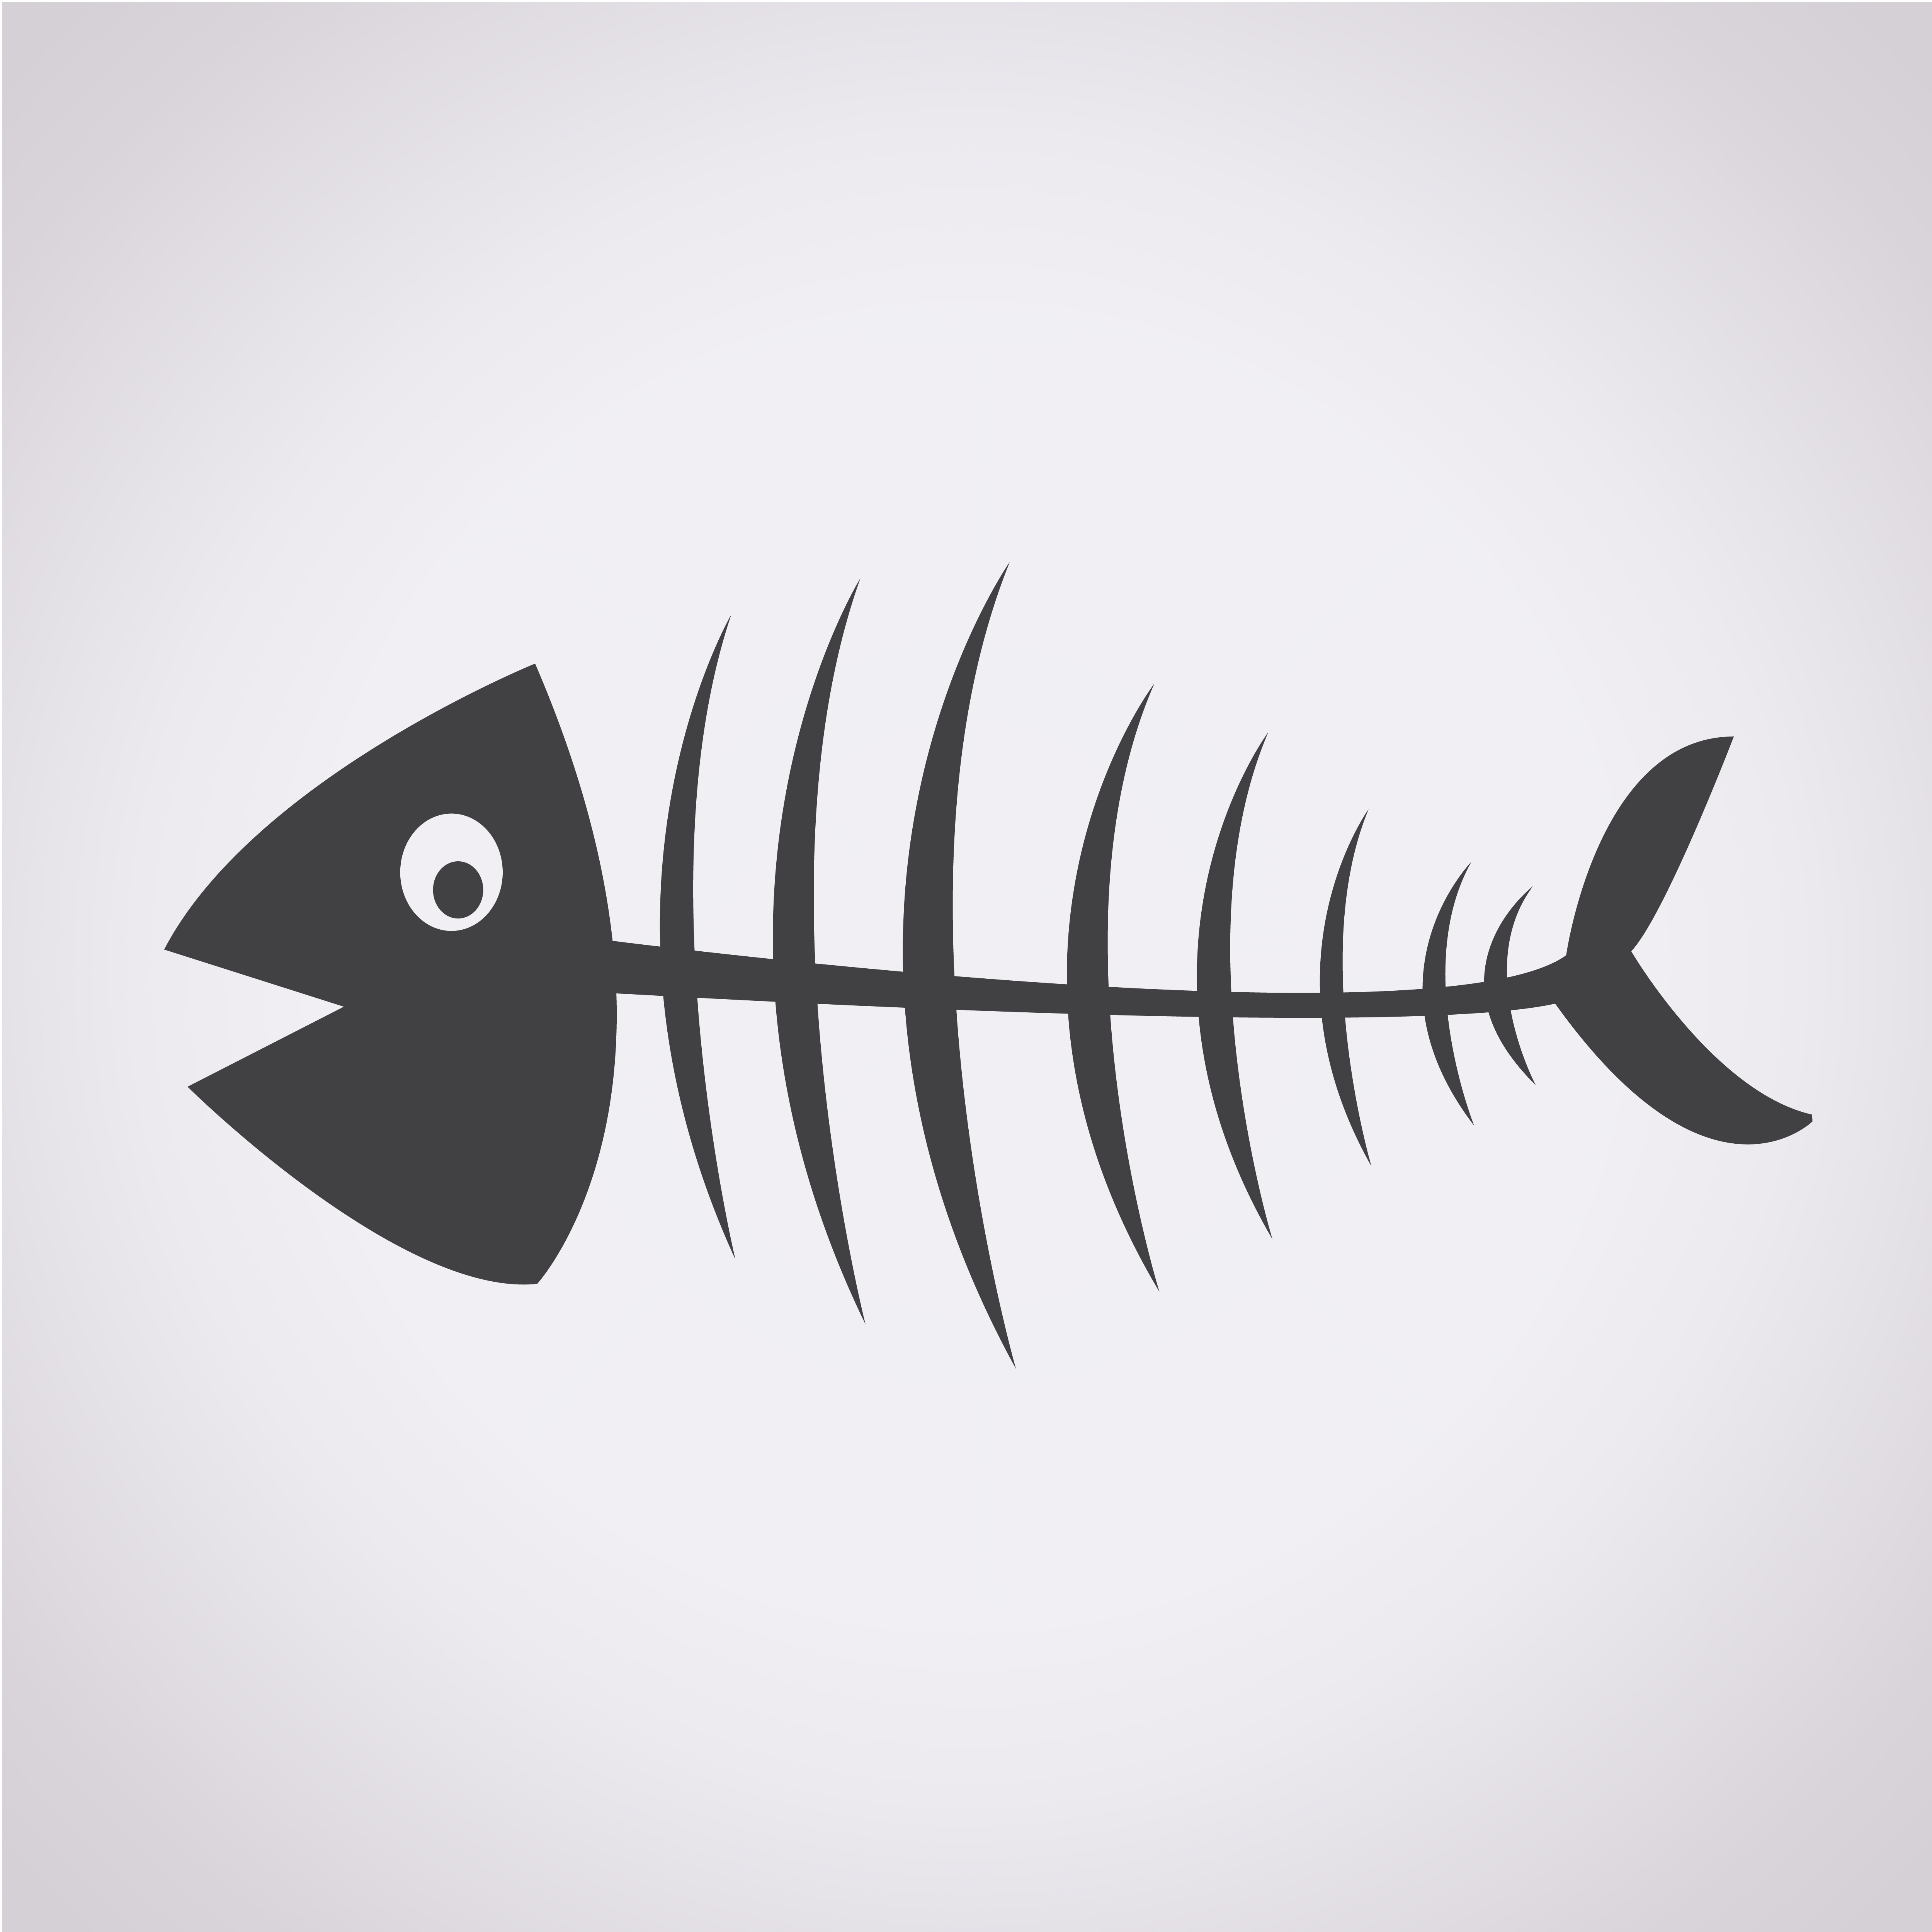 Download Fish skeleton symbol sign 649084 - Download Free Vectors ...